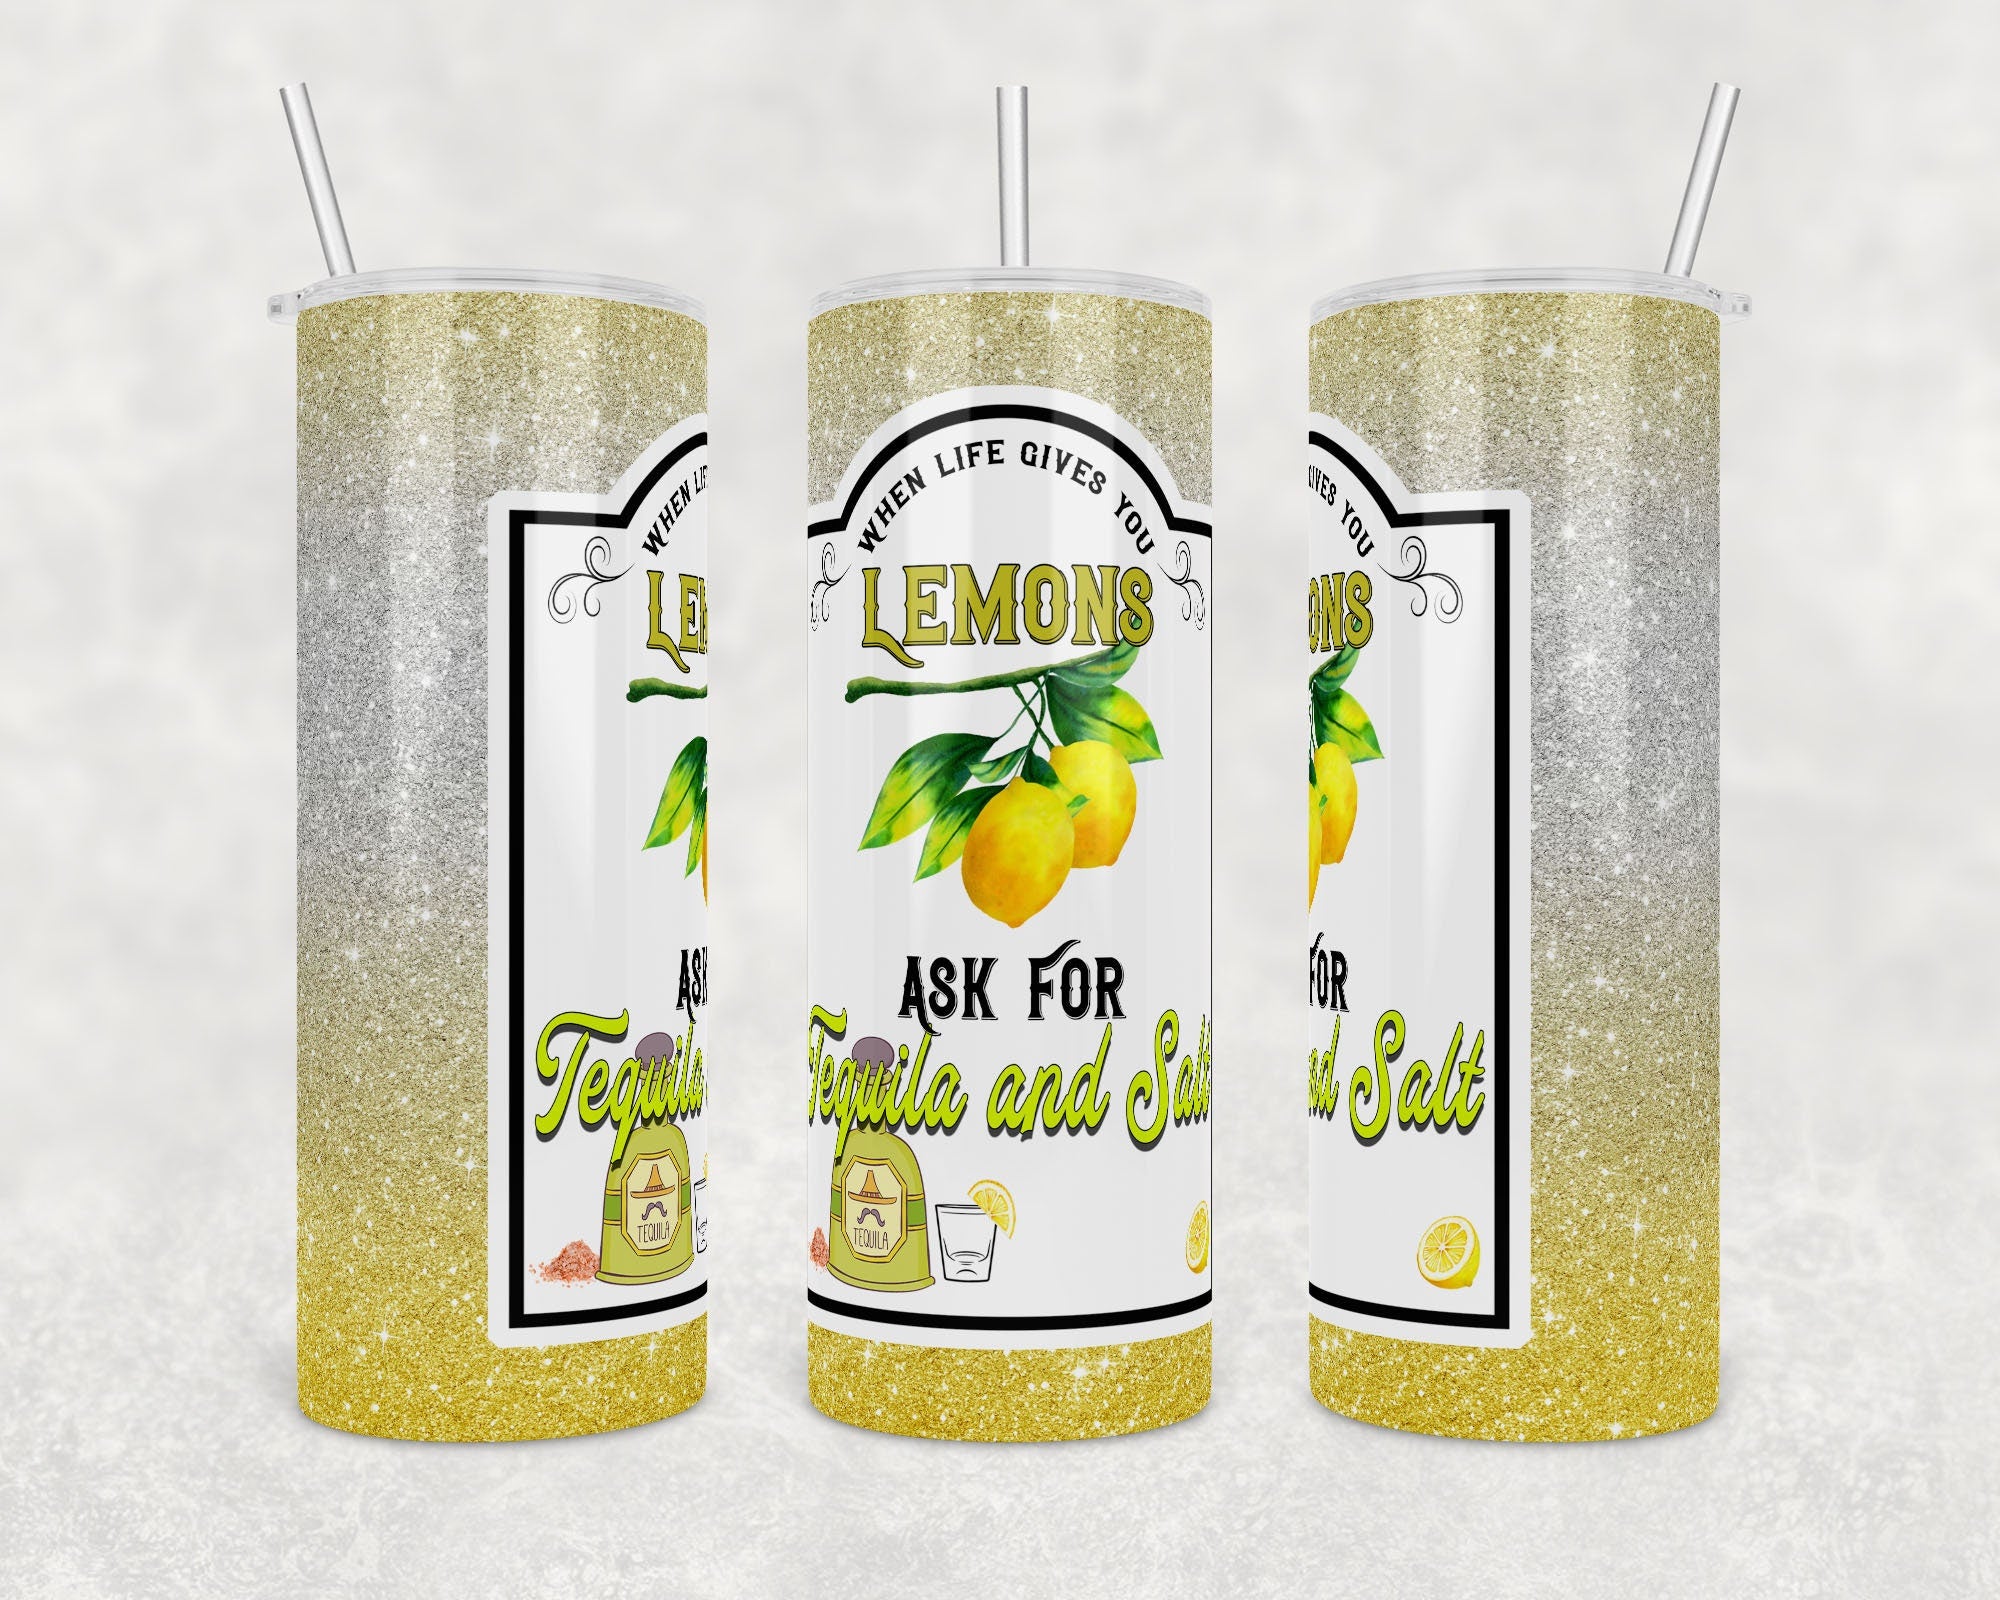 When Life Gives You Lemons, Ask For Tequila and Salt | Digital Download | Waterslide | Sublimation | PNG | Glitter Background